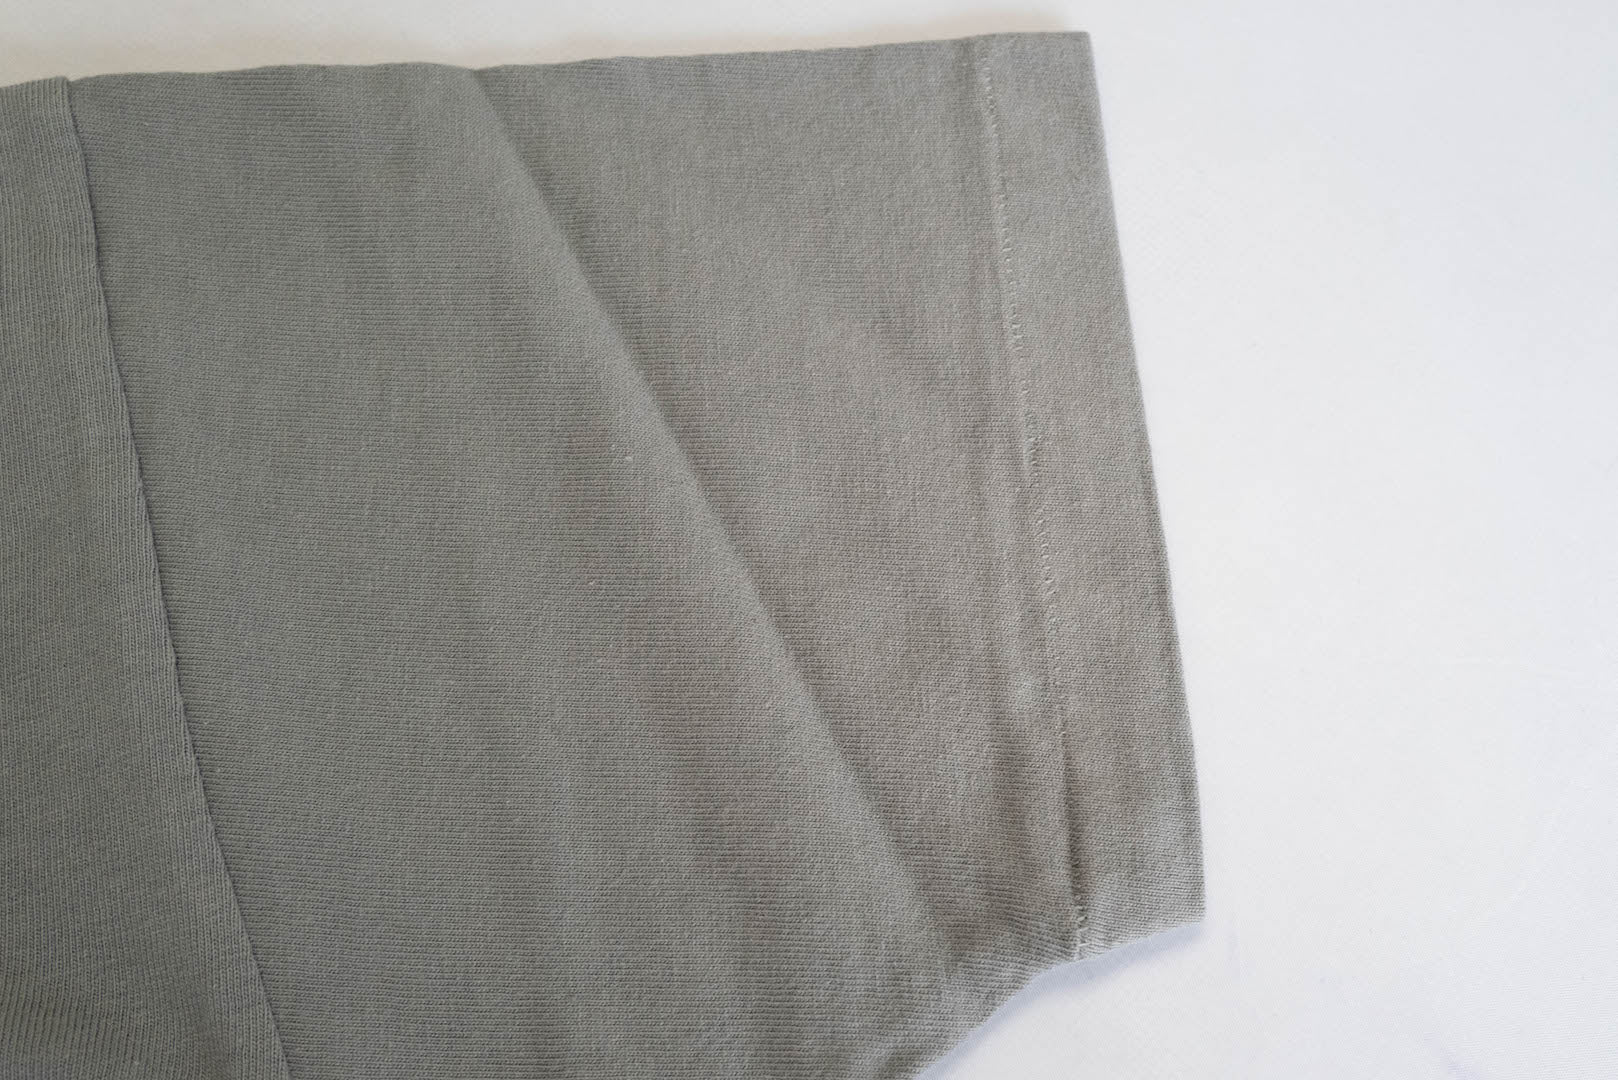 Unique Garment 7oz 'Airy' Plain Loopwheel Tee (Grey)